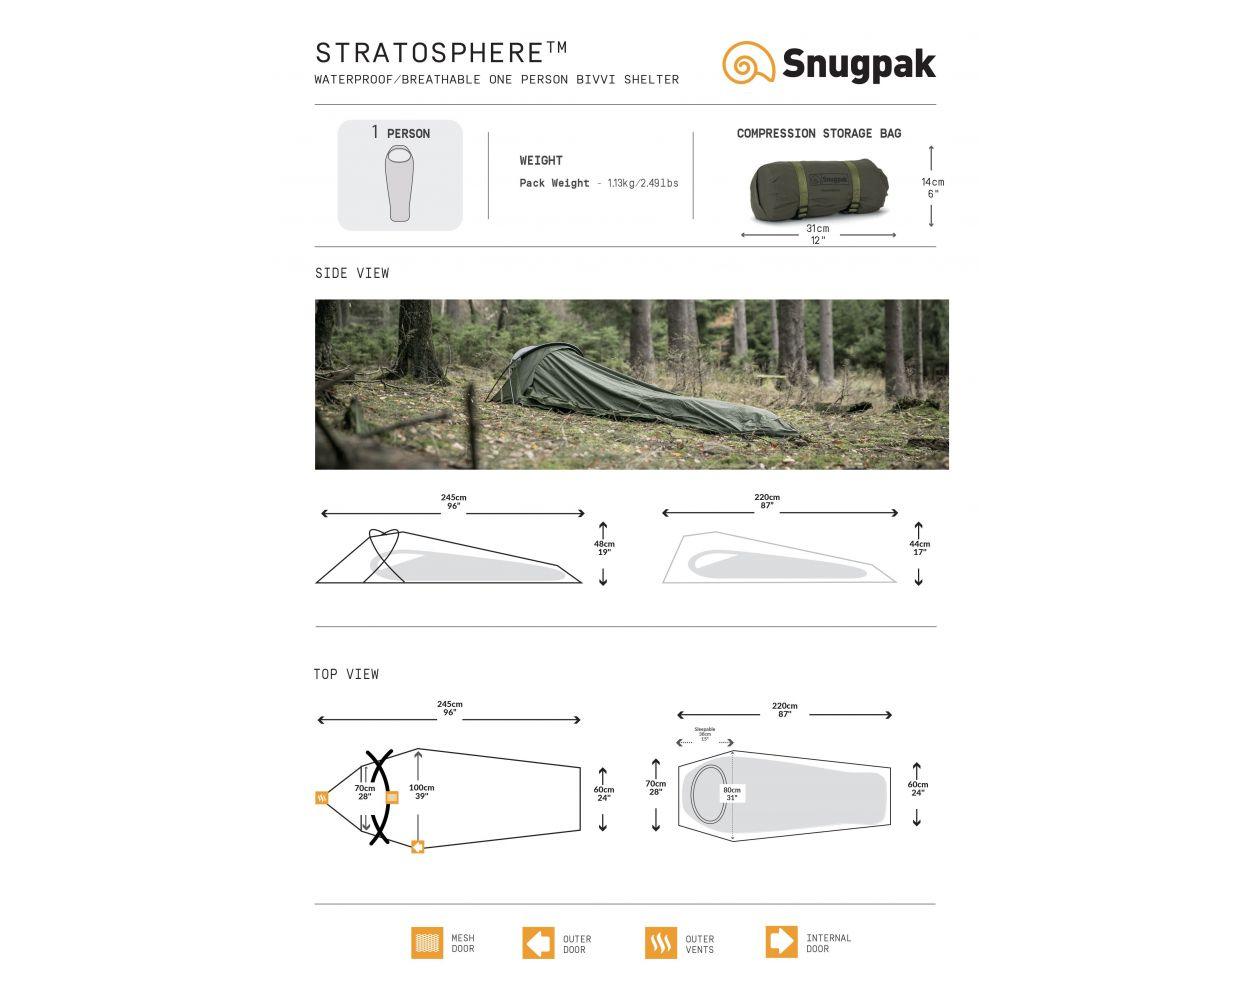 Snugpak Stratosphere Bivi Shelter - Kinetic Shop